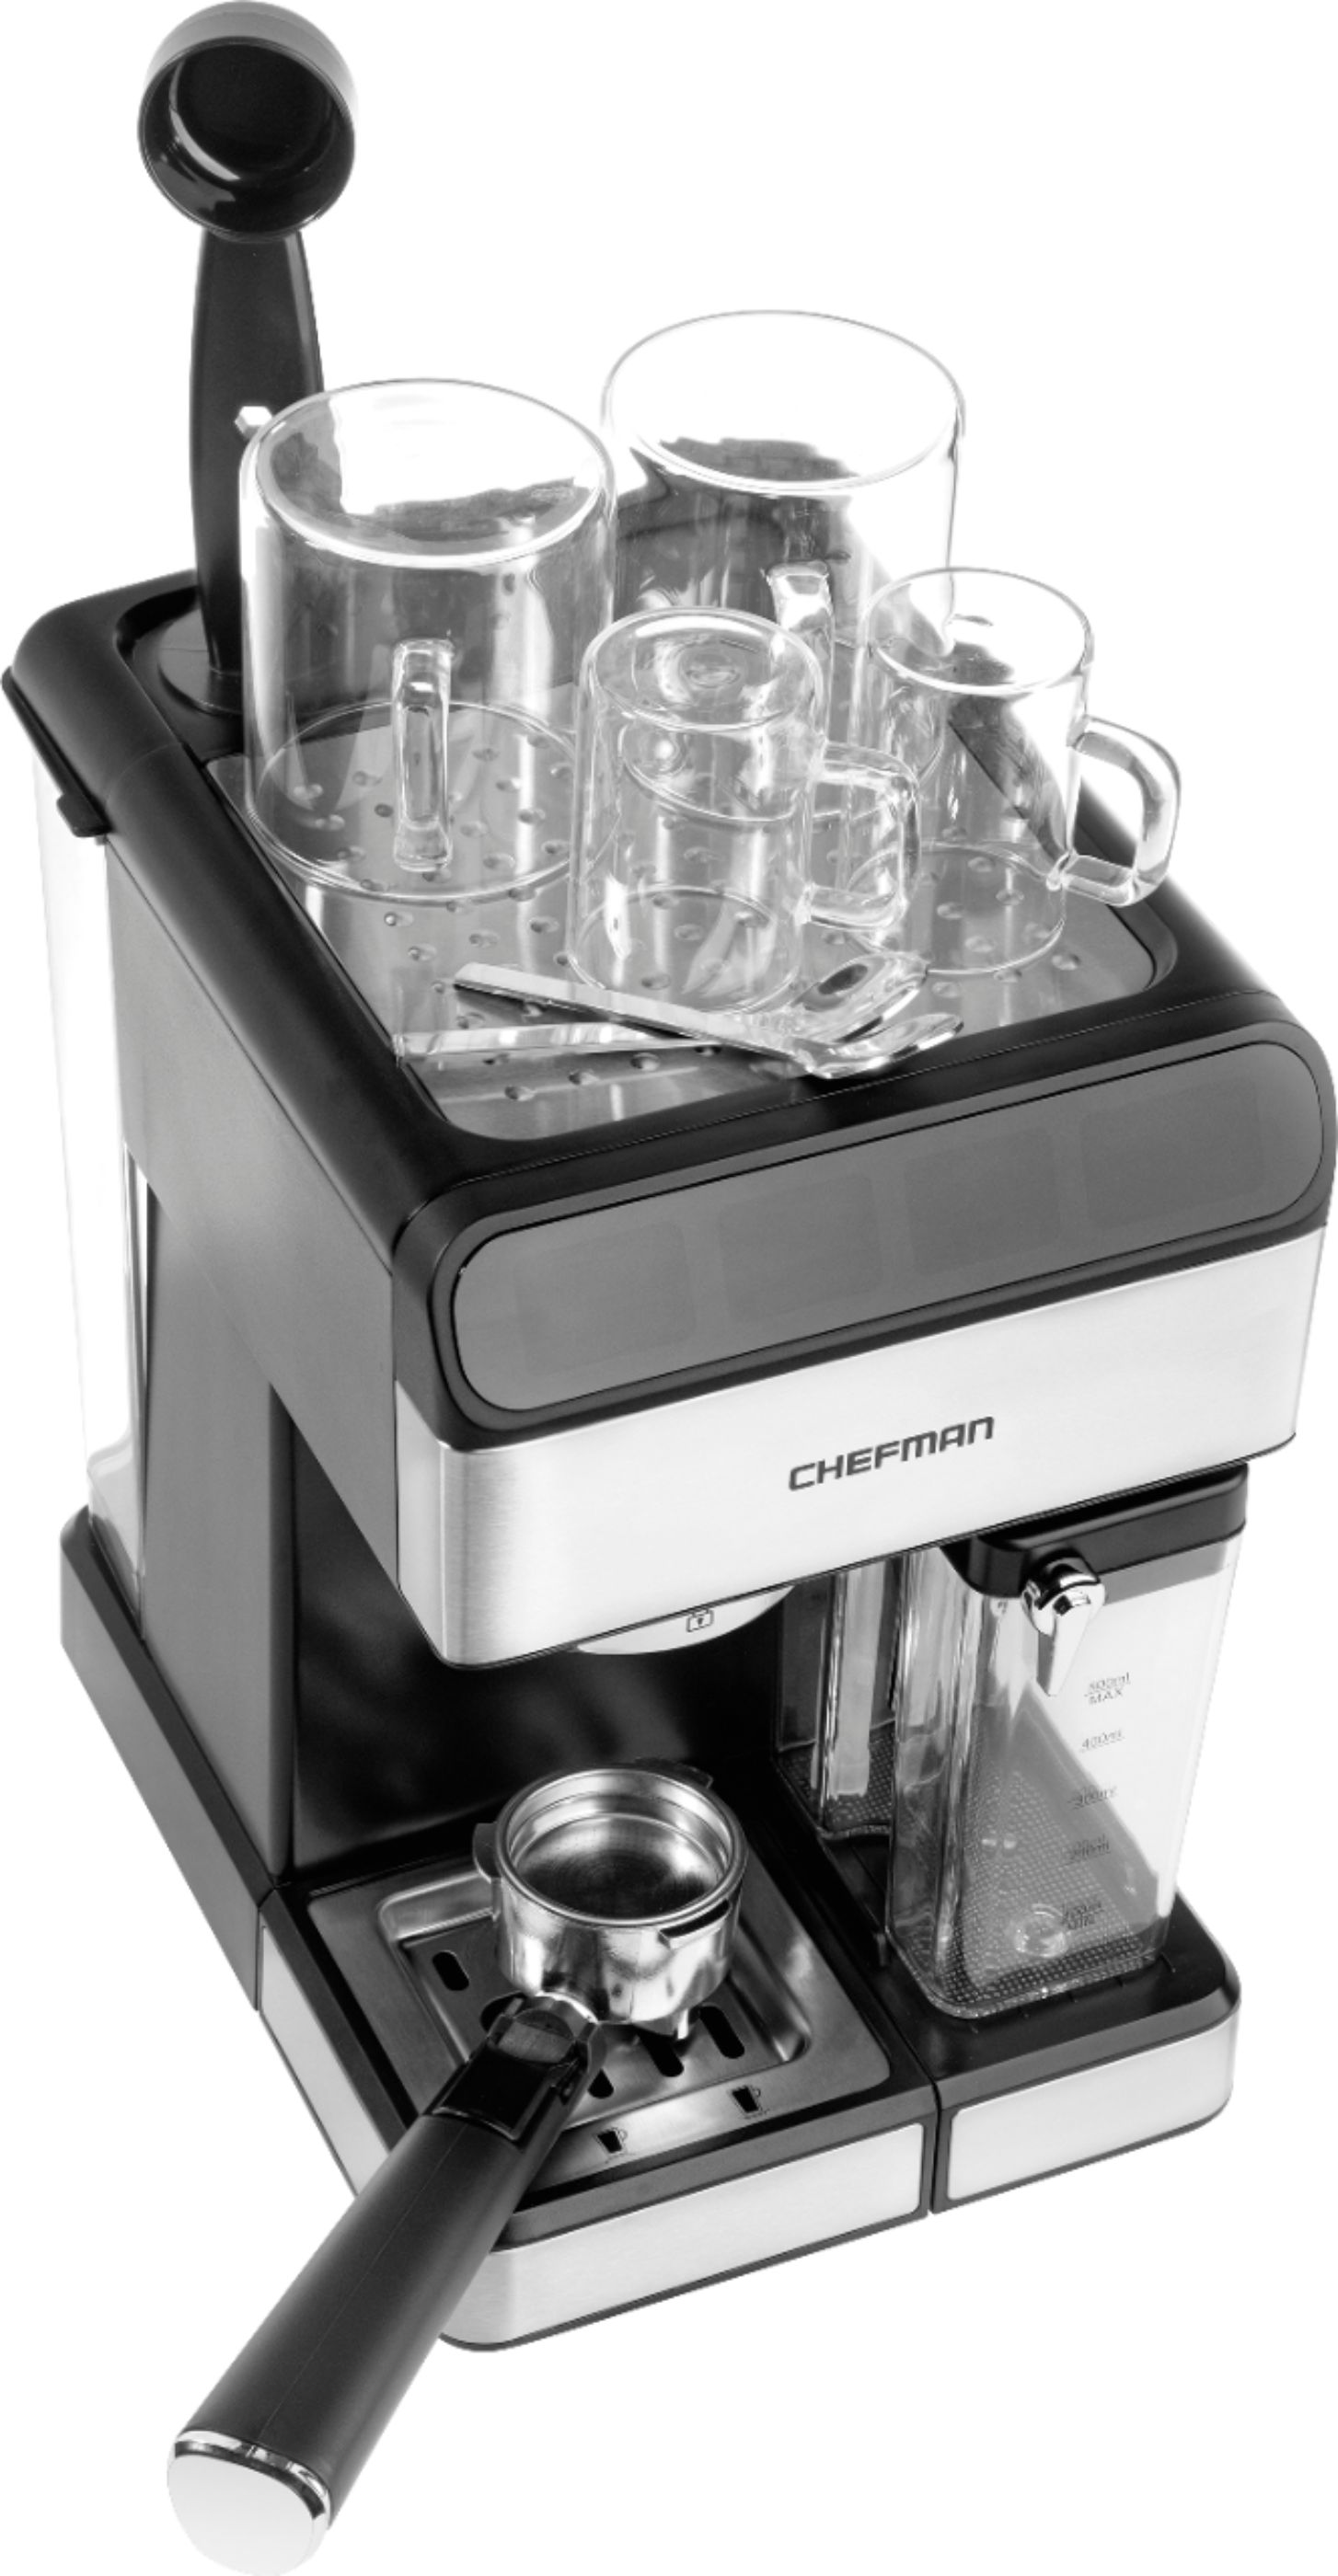 Chefman Espresso Machine How To Use 